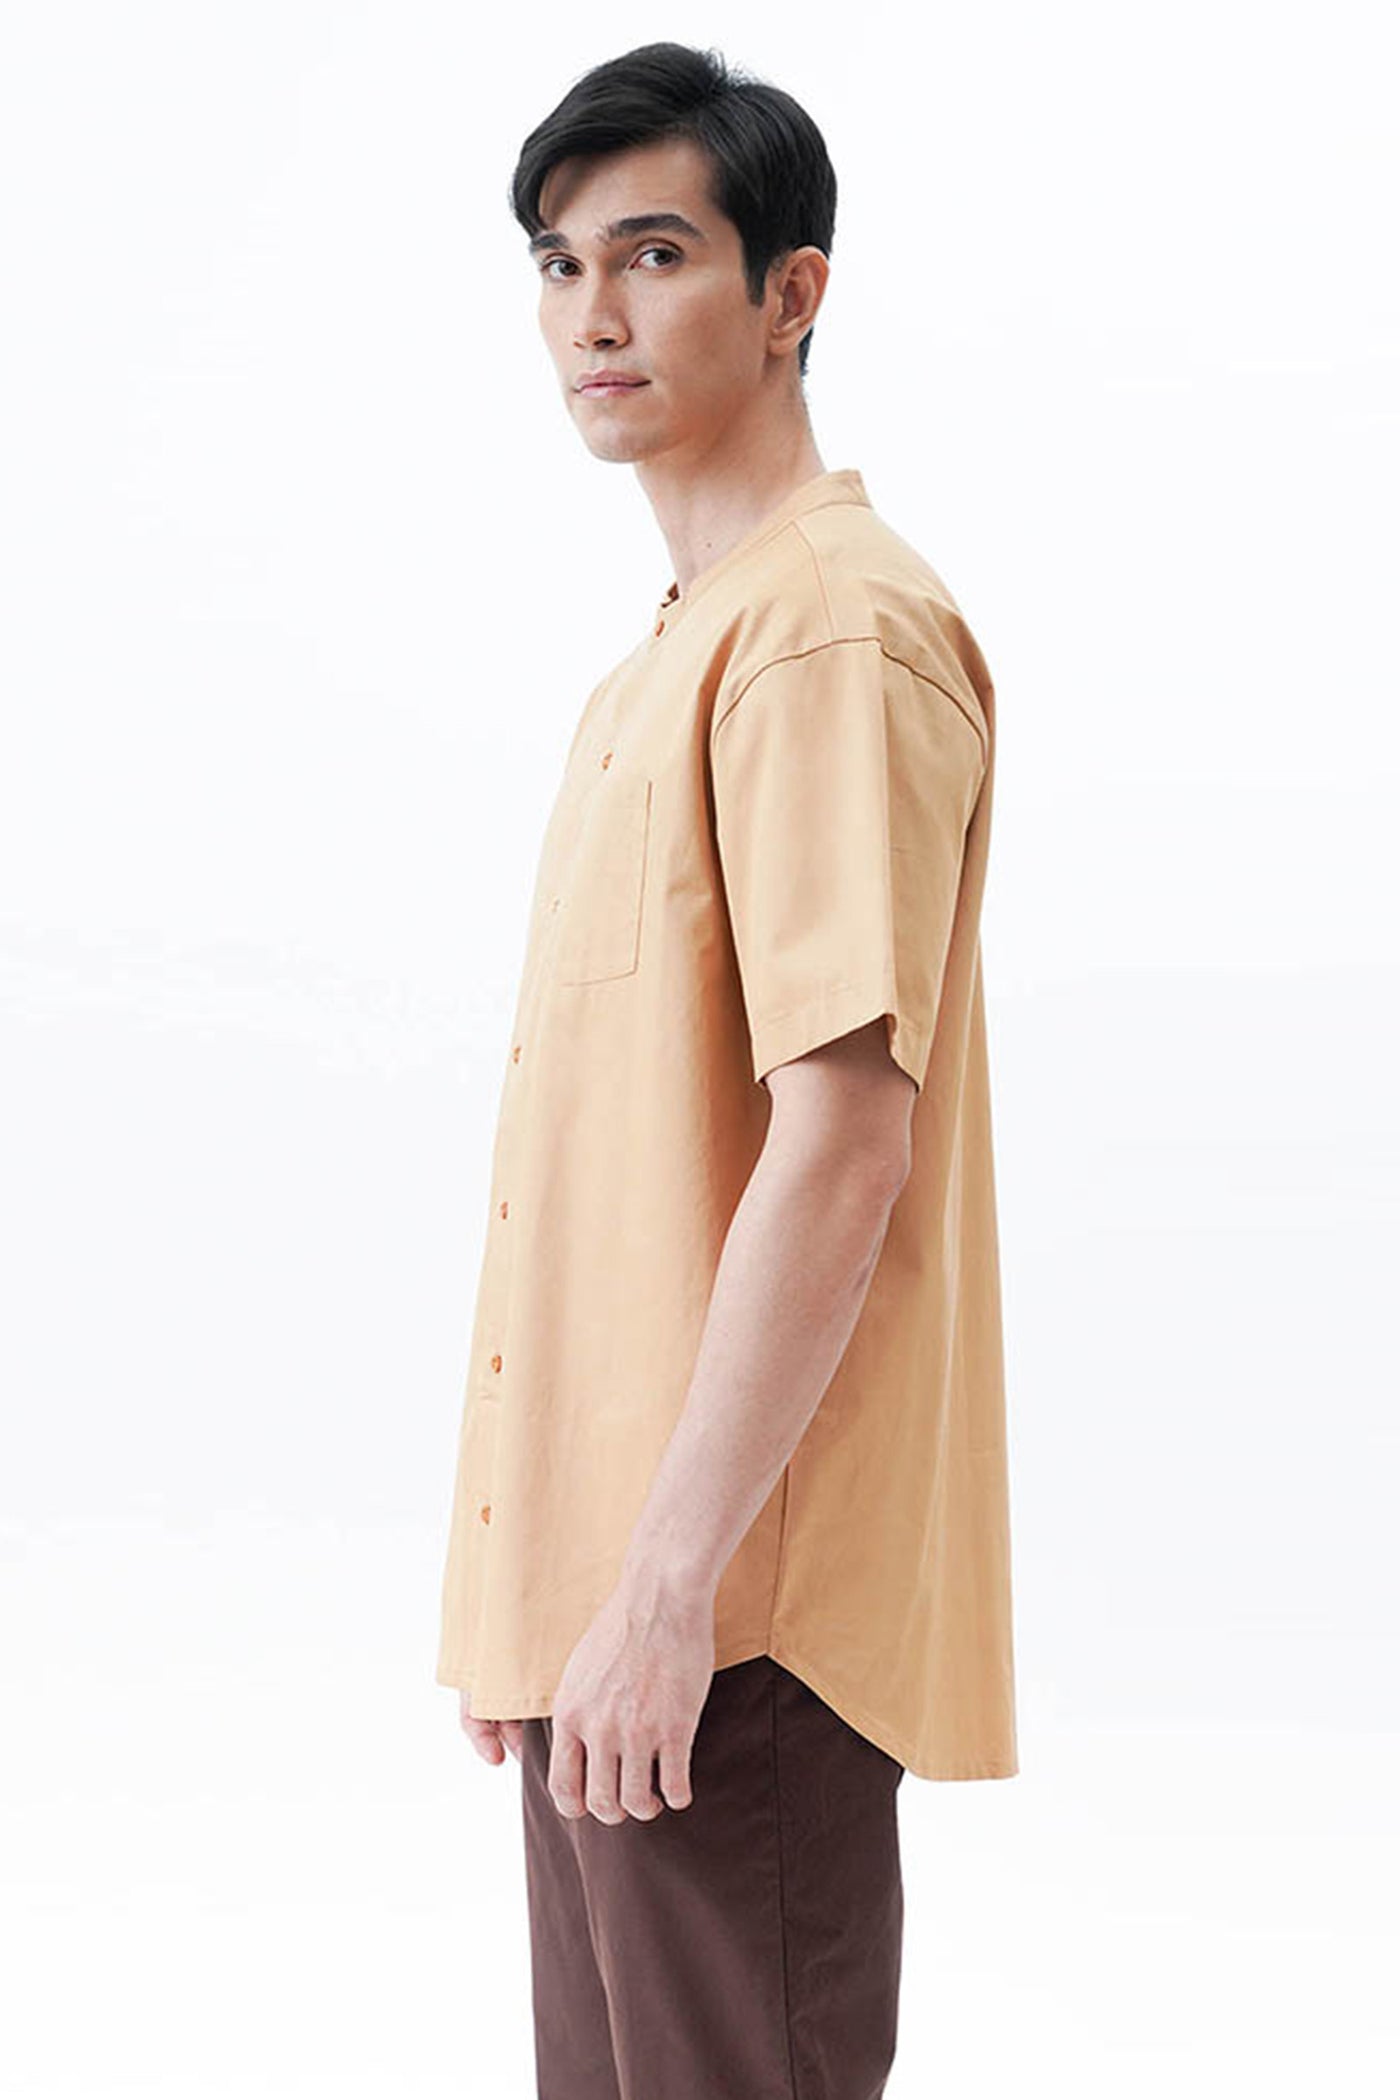 Men's Short Sleeve Shirt with Amboy Hem Detail